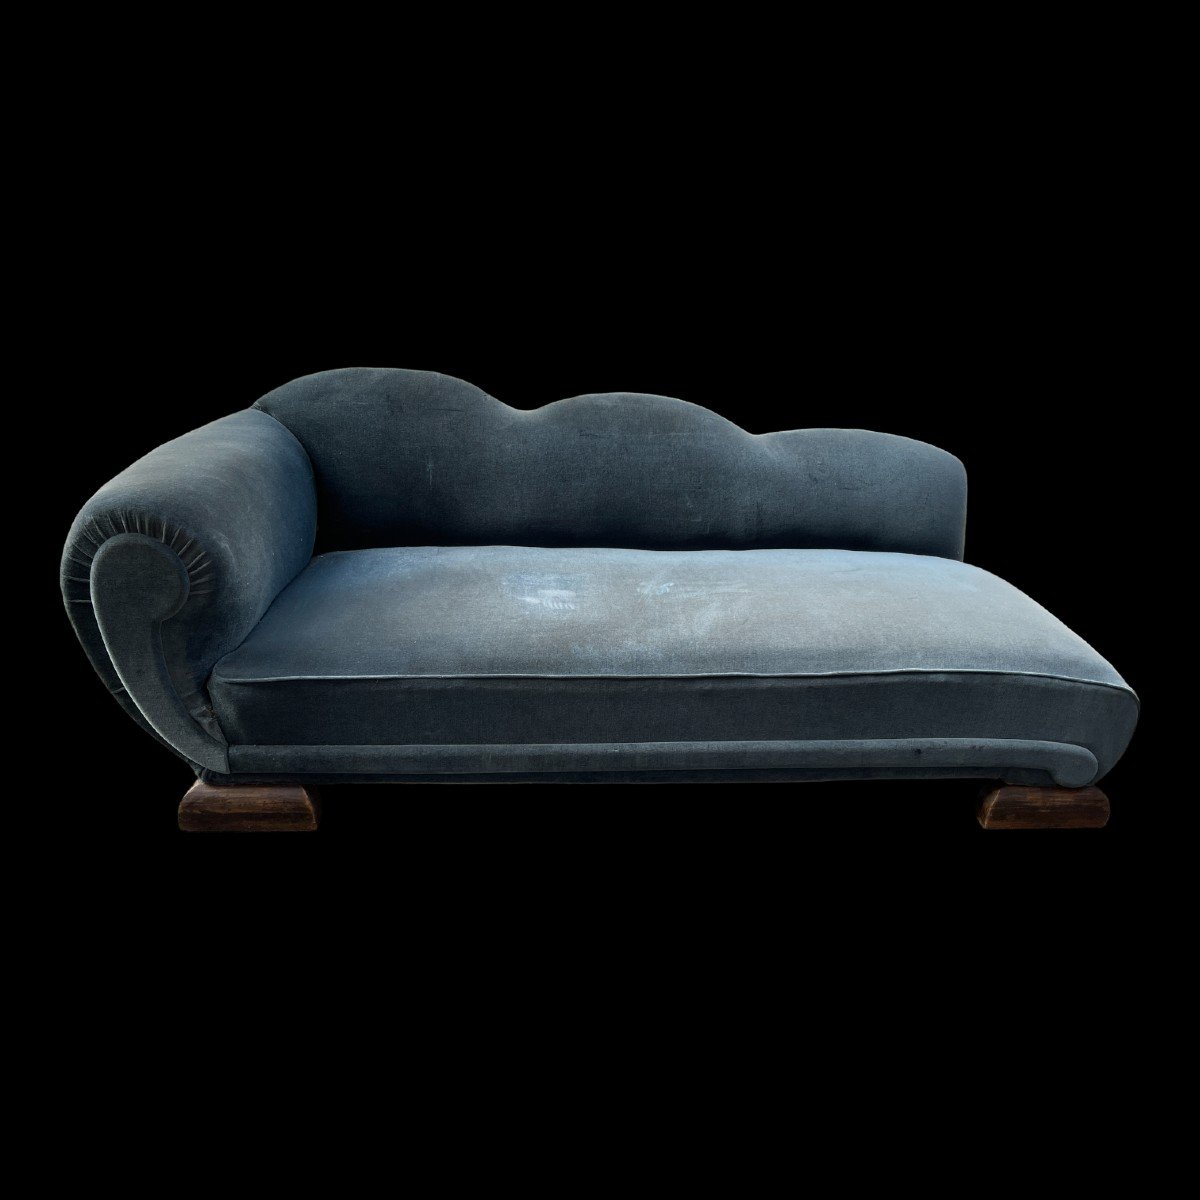 Récamier Meridian Chaise Longue Sofa Art Deco Ca 1930, Velvet Fabric To Clean Or Replace